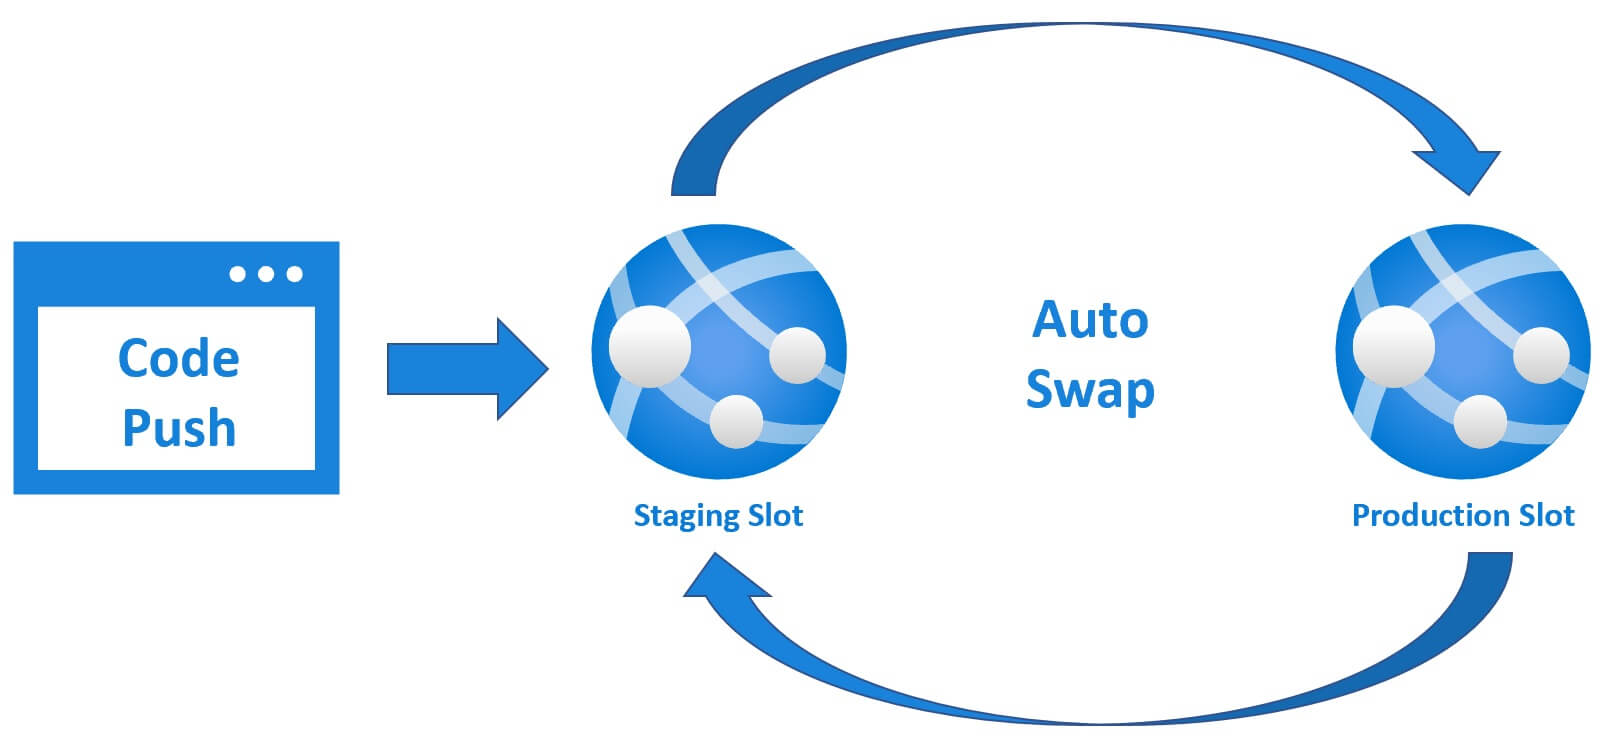 azure app service auto swap